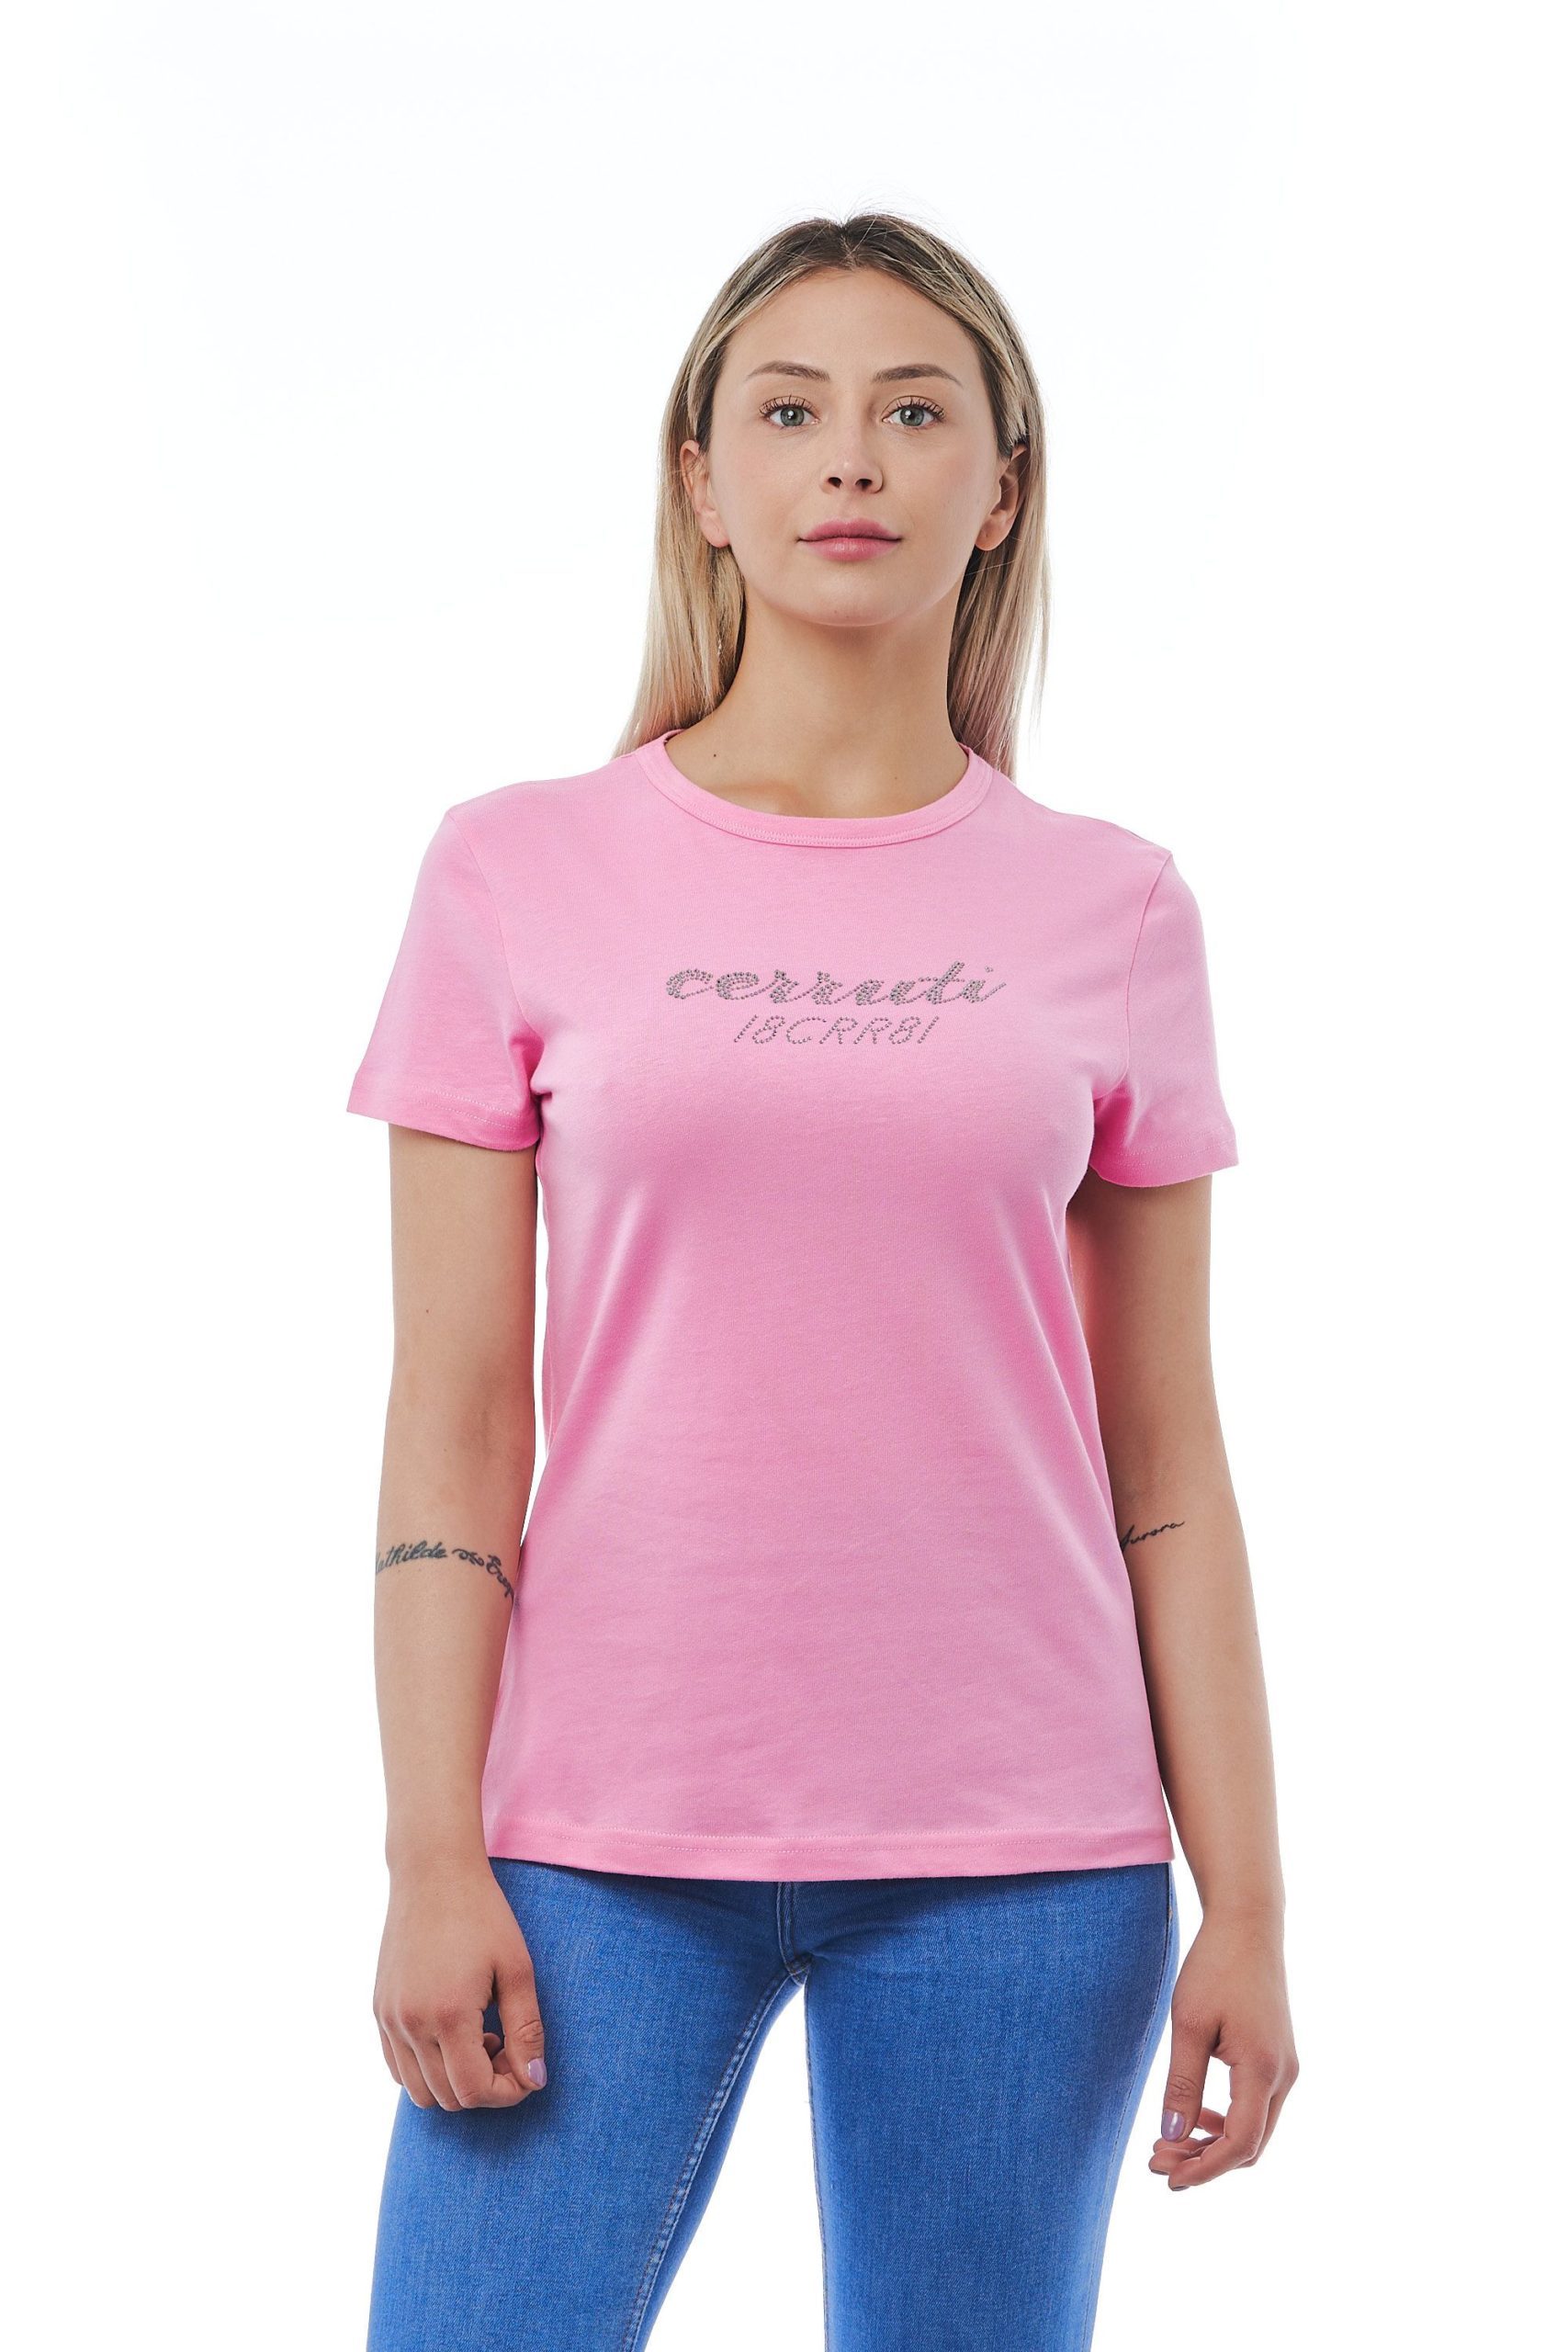 Cerruti 1881 Women's Rosa T-Shirt Pink CE1410228 - M